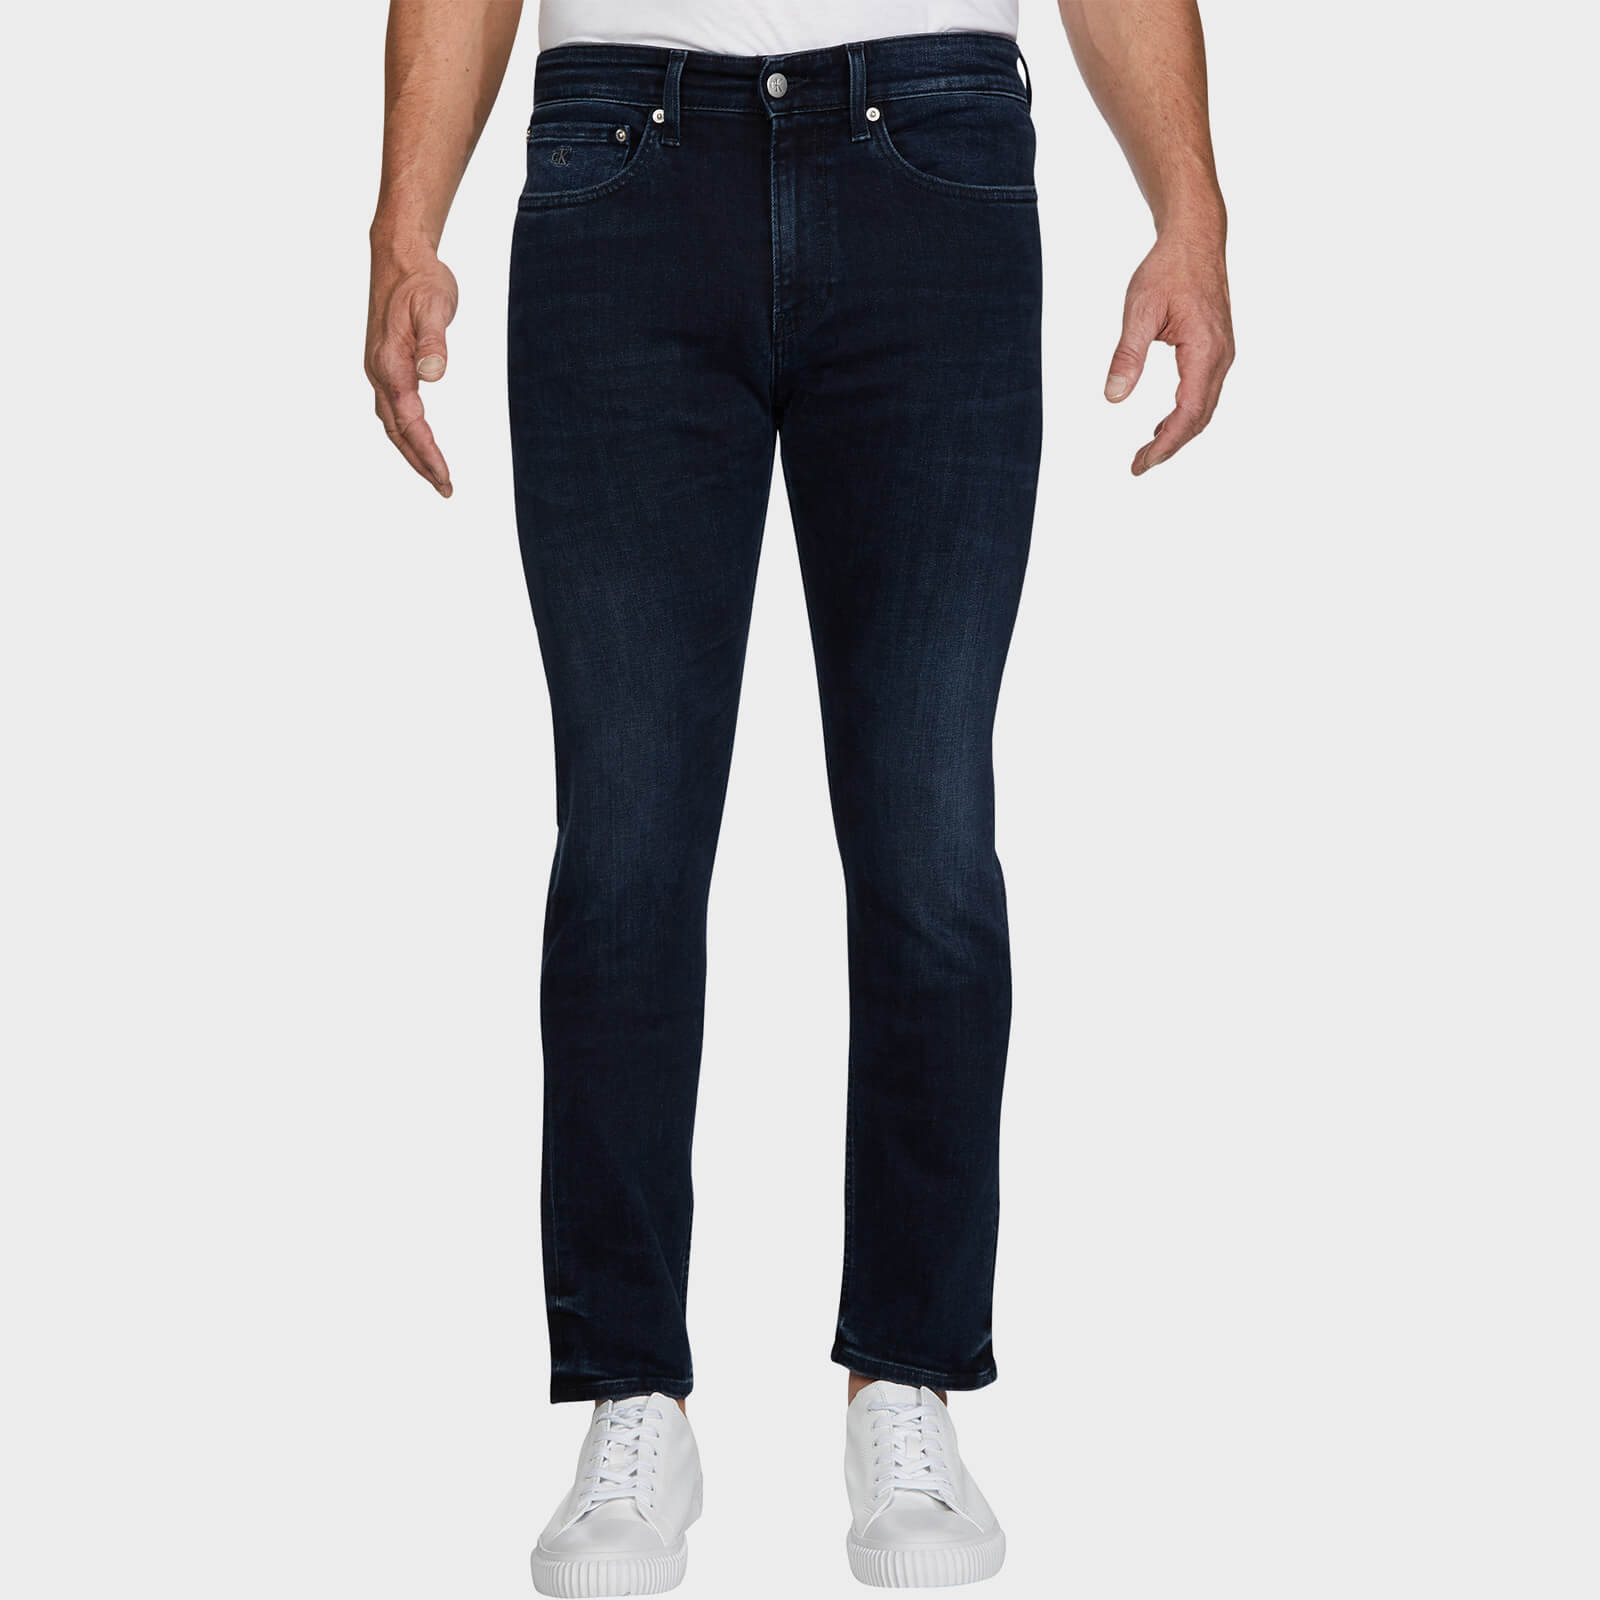 CK Jeans Men's Skinny Jeans - Blue Black - W30/L32